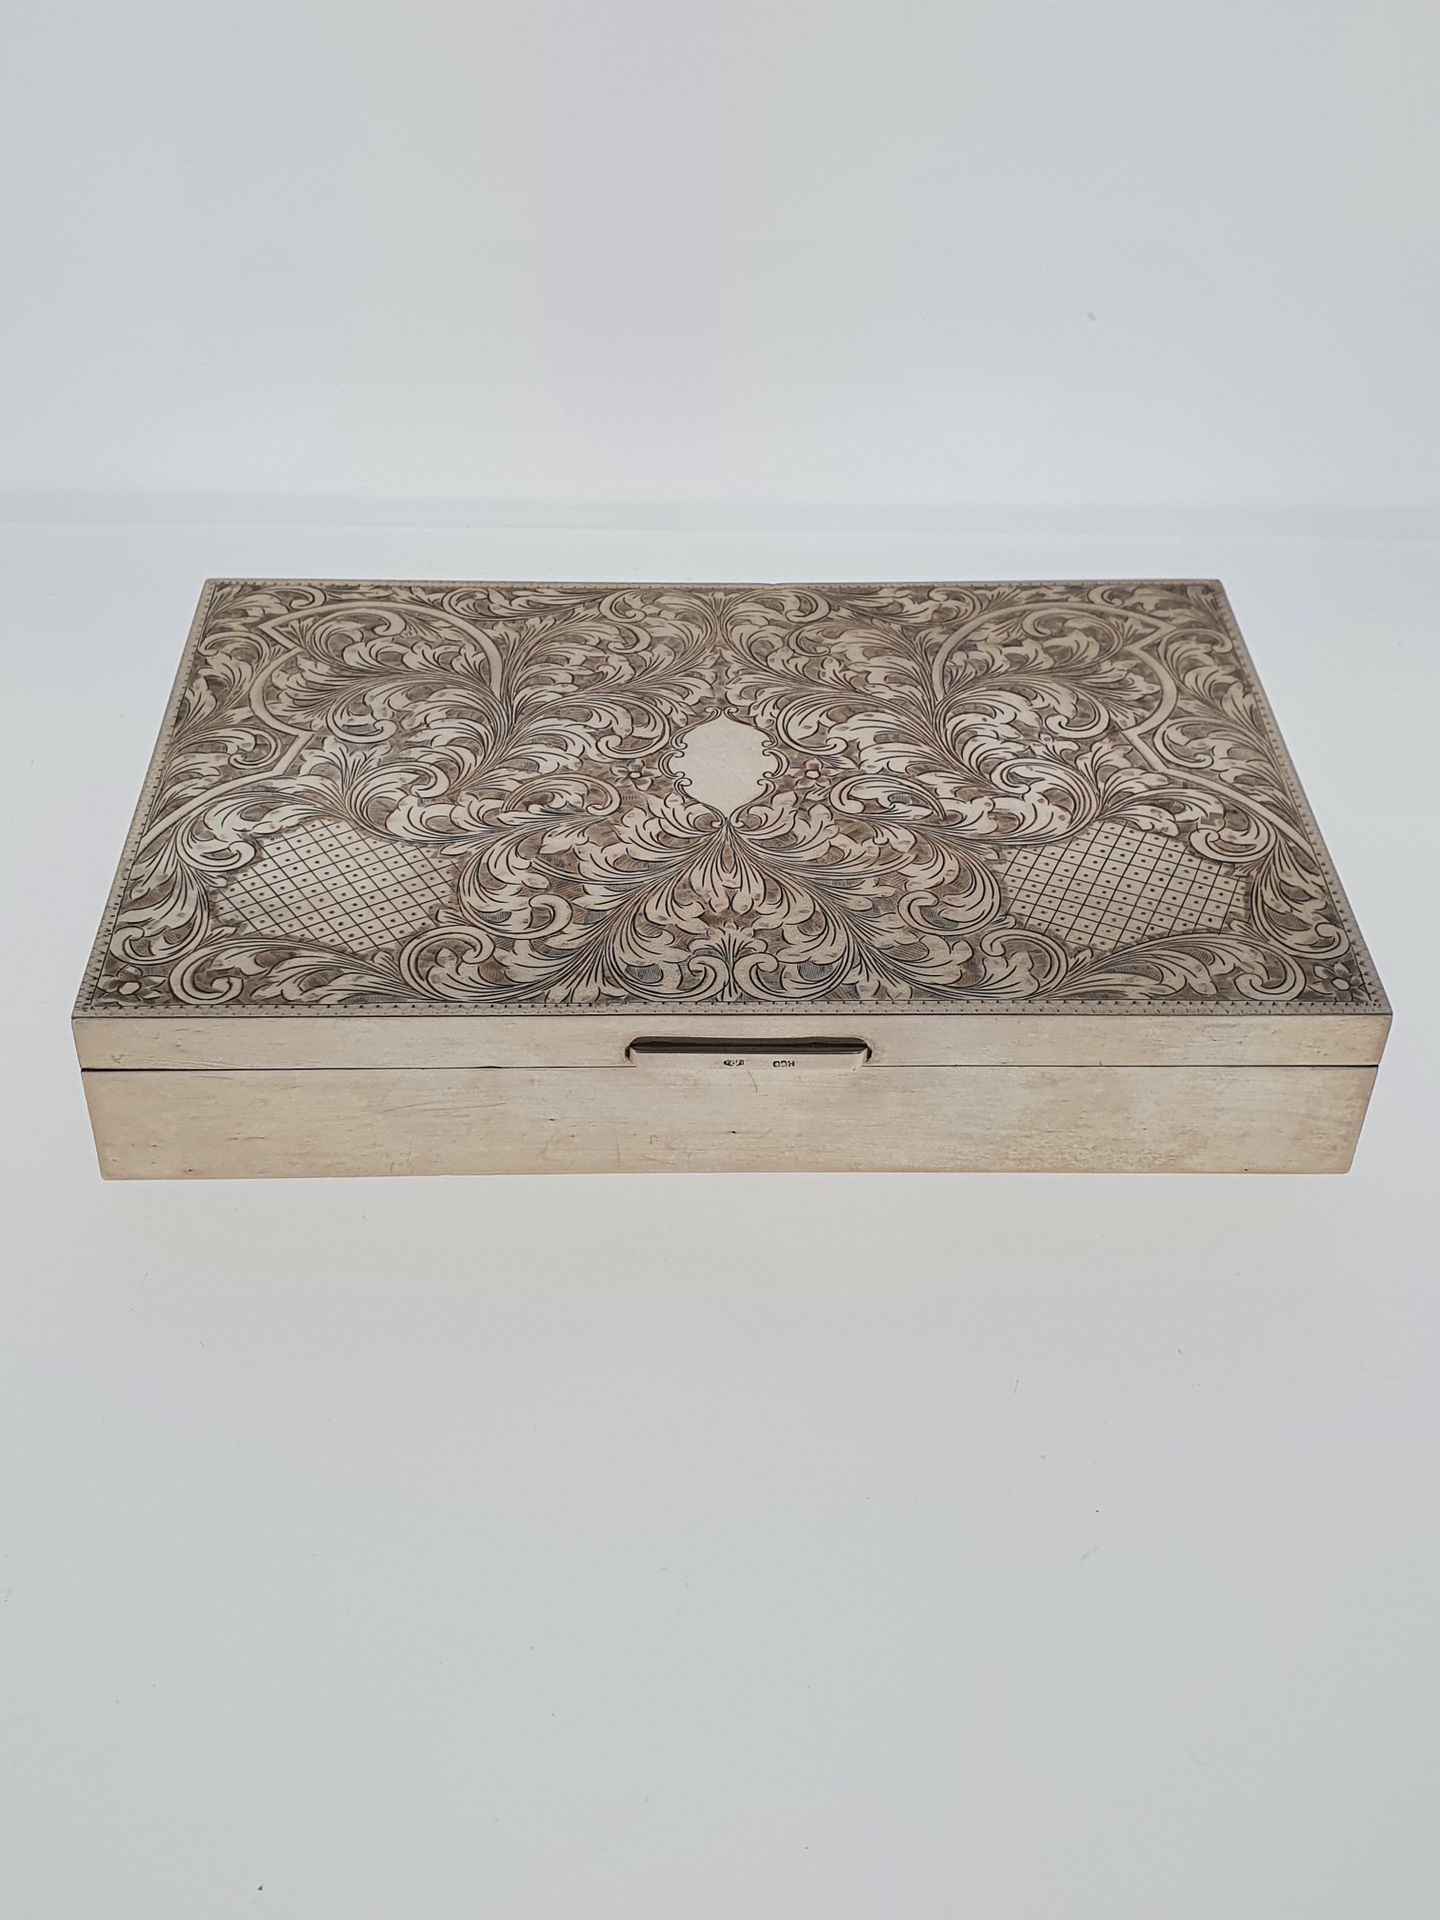 Null 一个镀银的木箱，露台上装饰着树叶和卷轴。

标题800

20世纪

高度：3.5厘米

20 x 13厘米